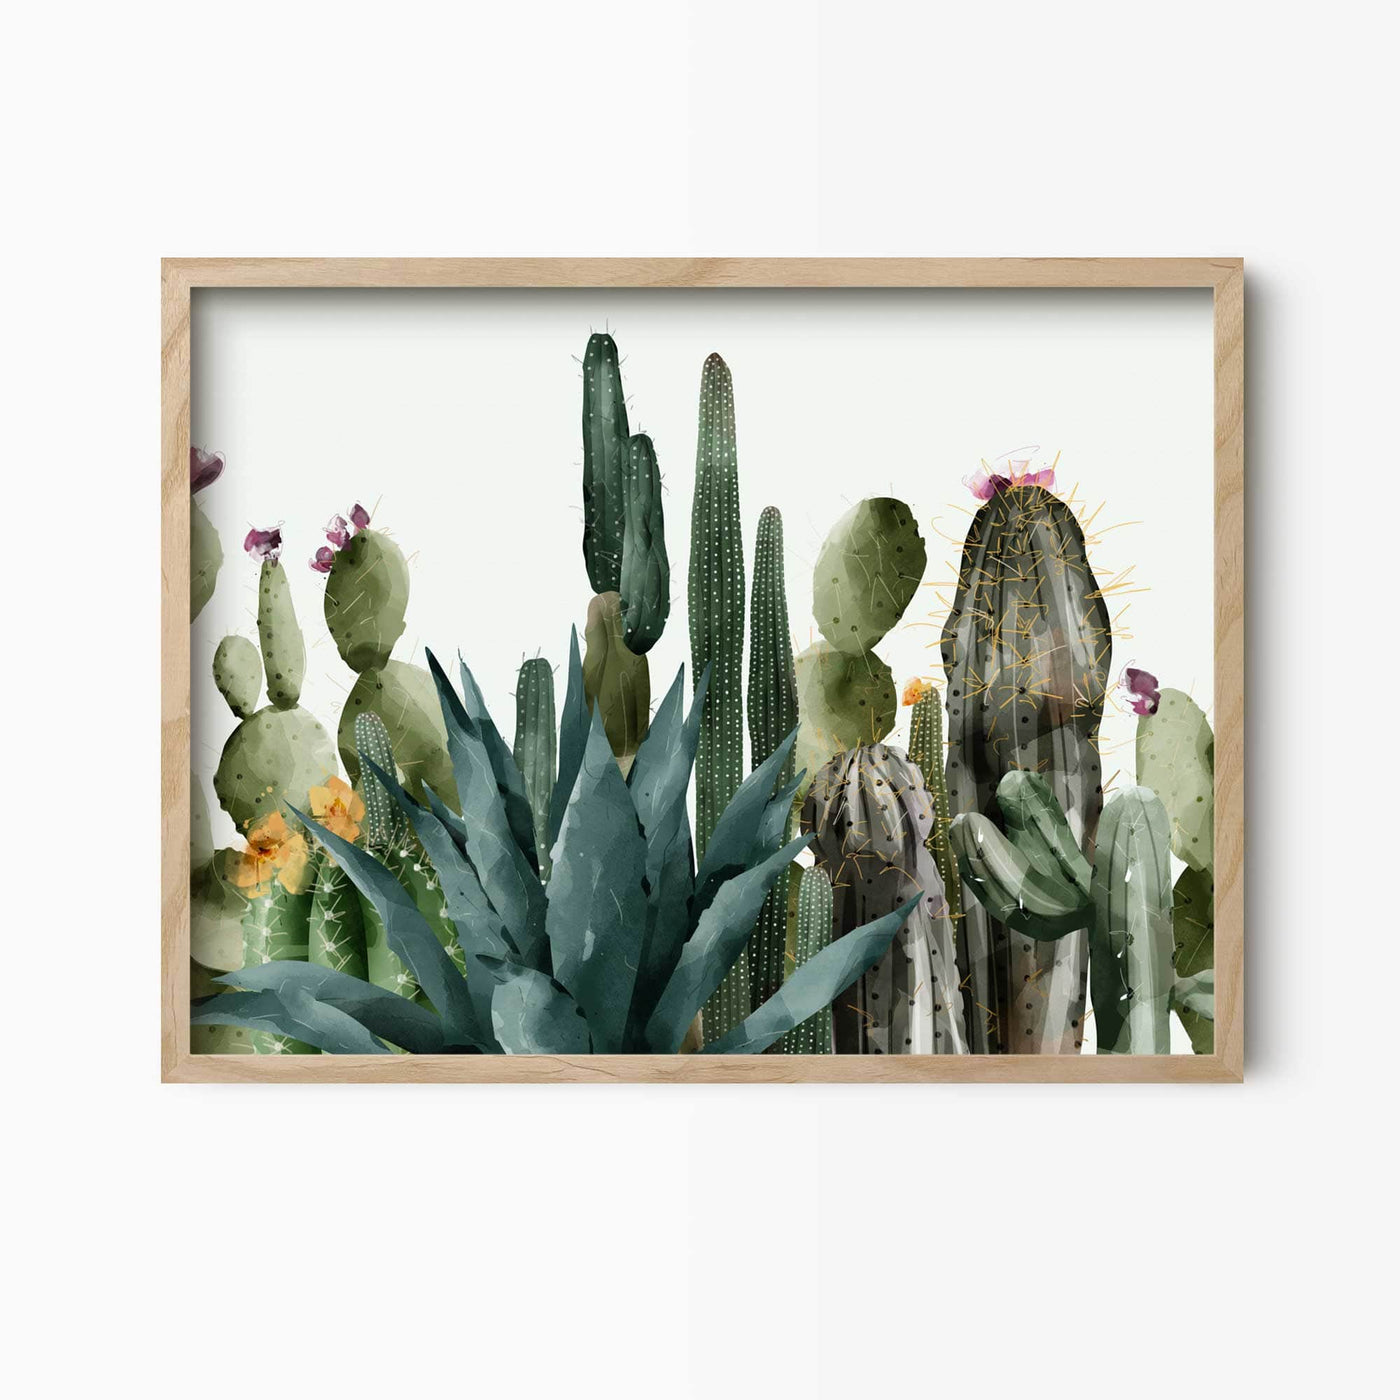 Green Lili 30x40cm (12x16") / Natural Frame Cactus Garden Art Print